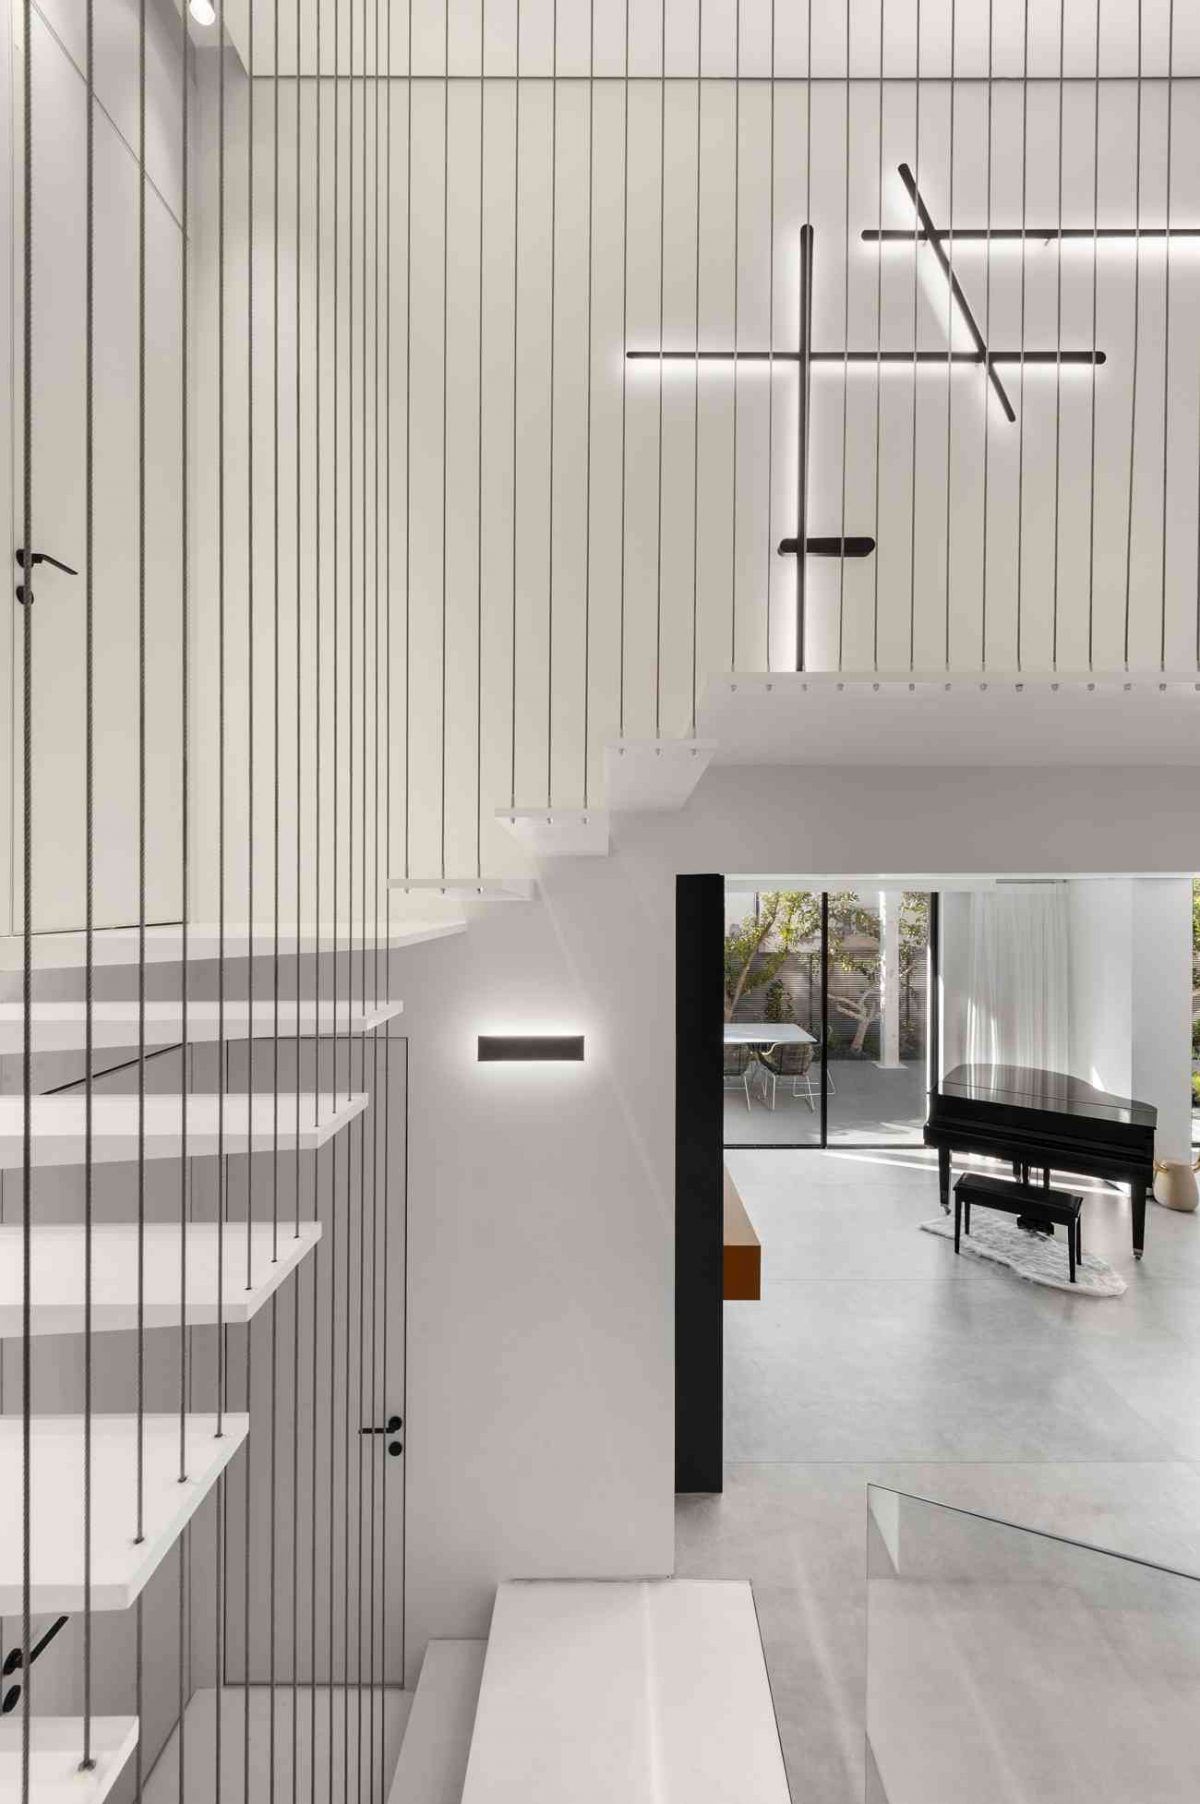 Simoene Architects Ltd – Central Israel תאורה על גרם המדרגות בעיצובו של קמחי דורי